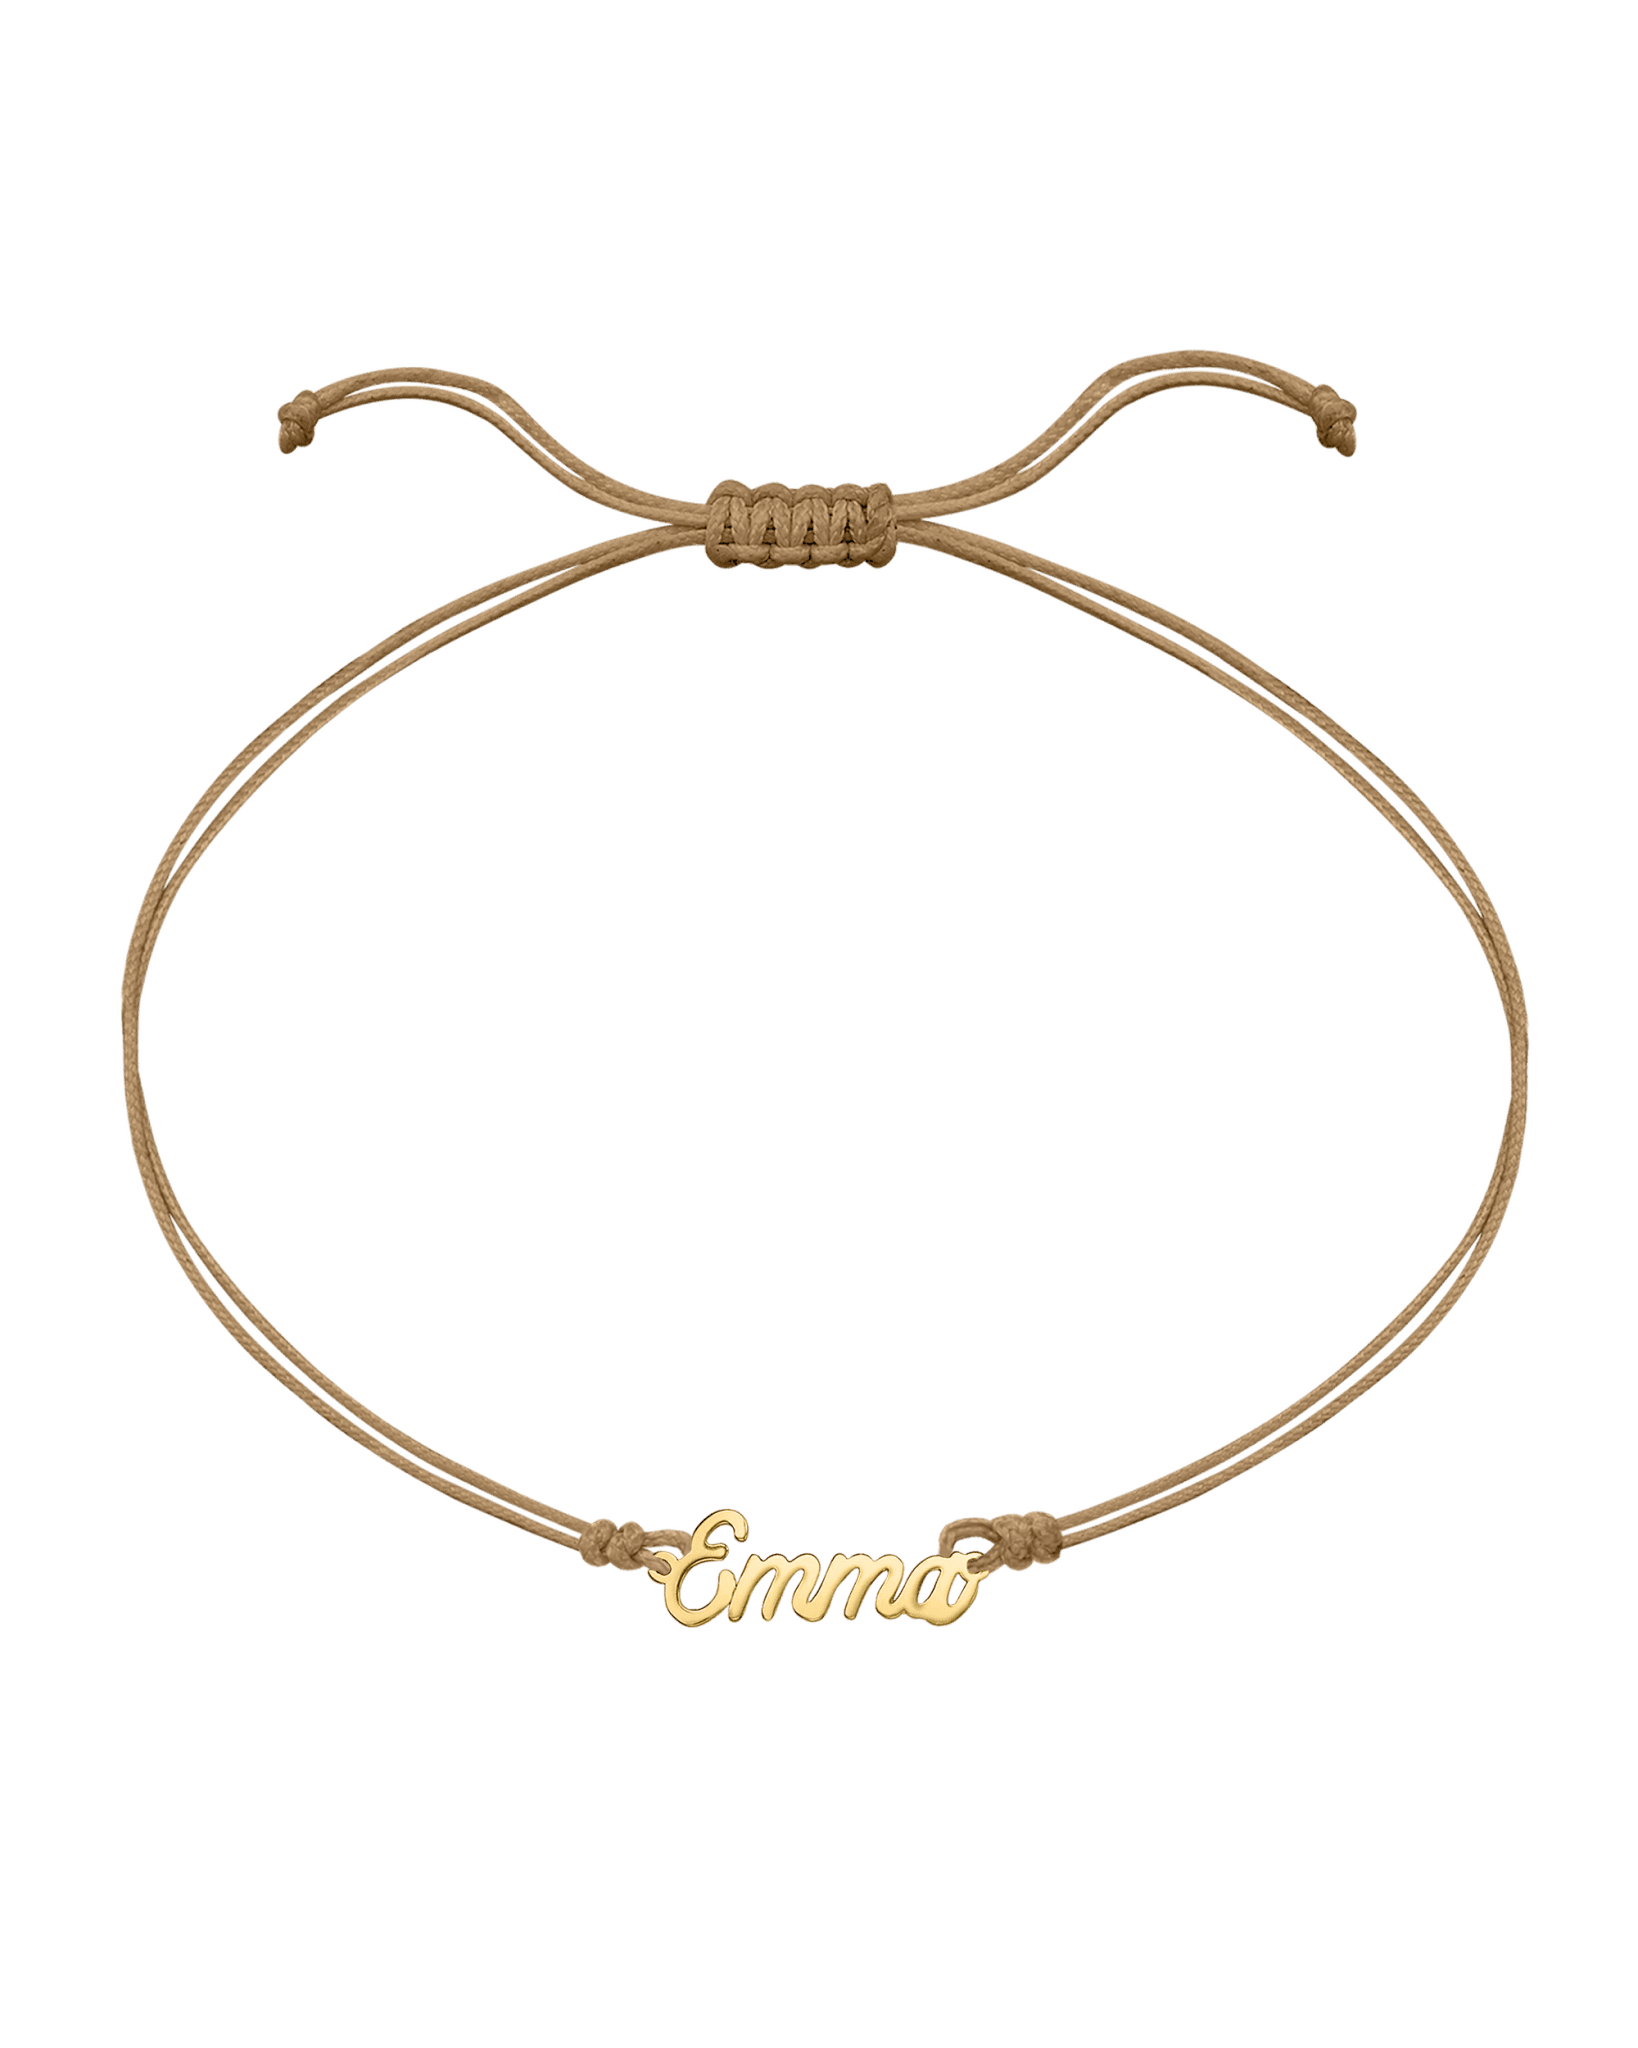 Name Plate String of Love - 14K Yellow Gold Bracelets 14K Solid Gold Camel 1 